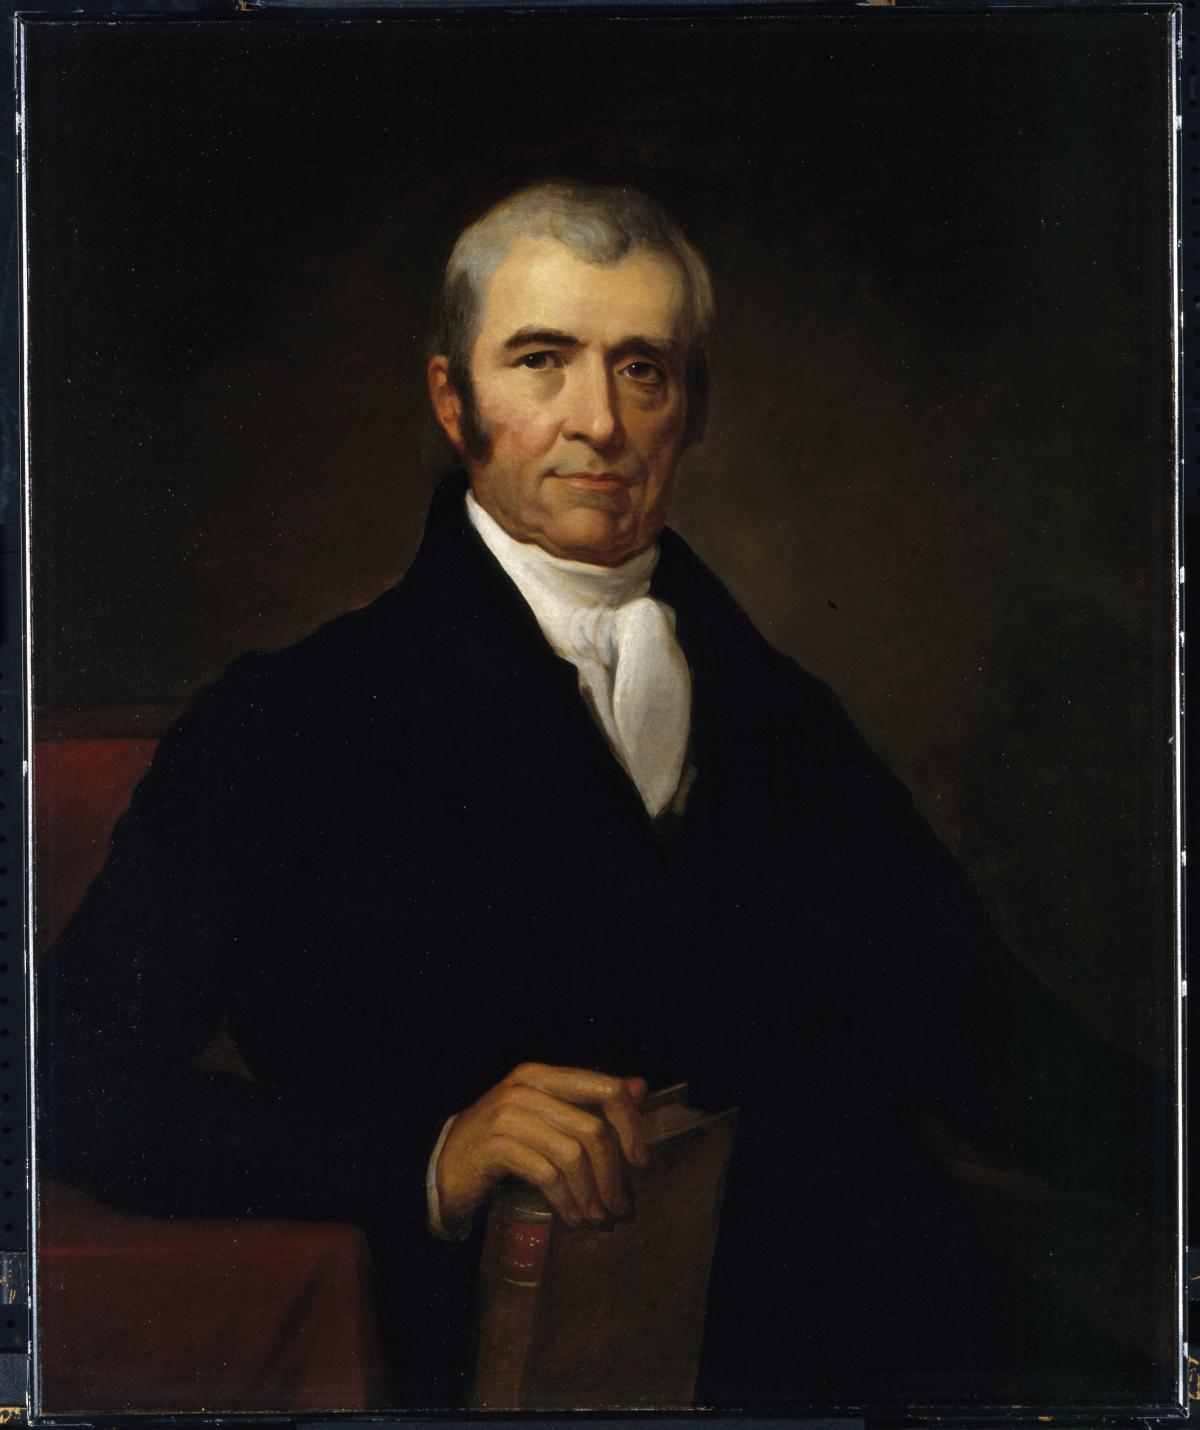 Oil painting portrait of John Marshall